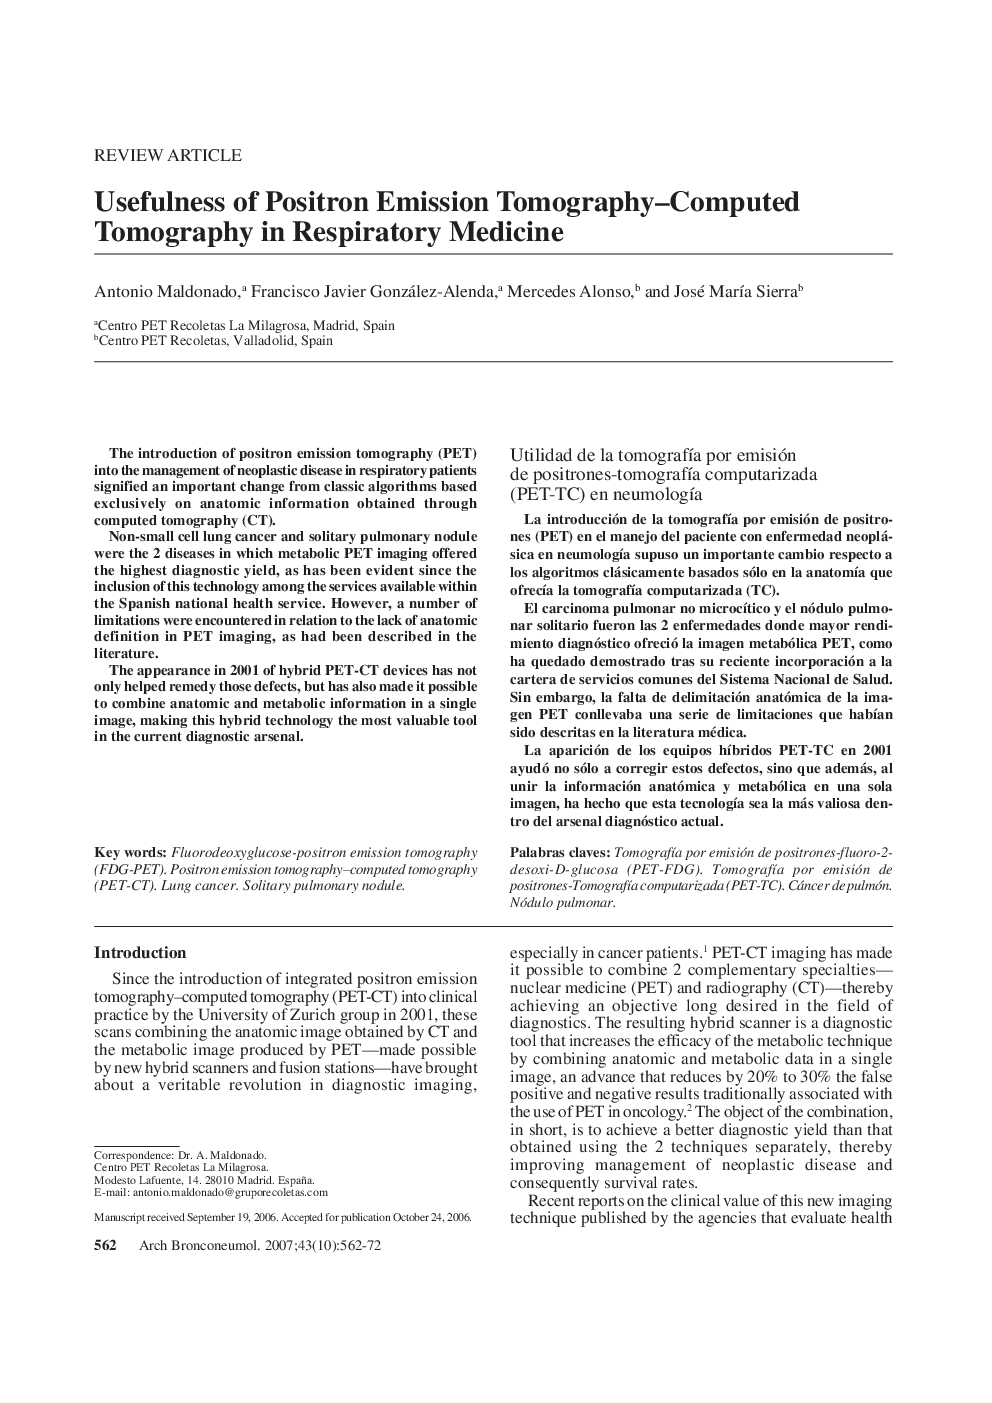 Usefulness of Positron Emission Tomography-Computed Tomography in Respiratory Medicine